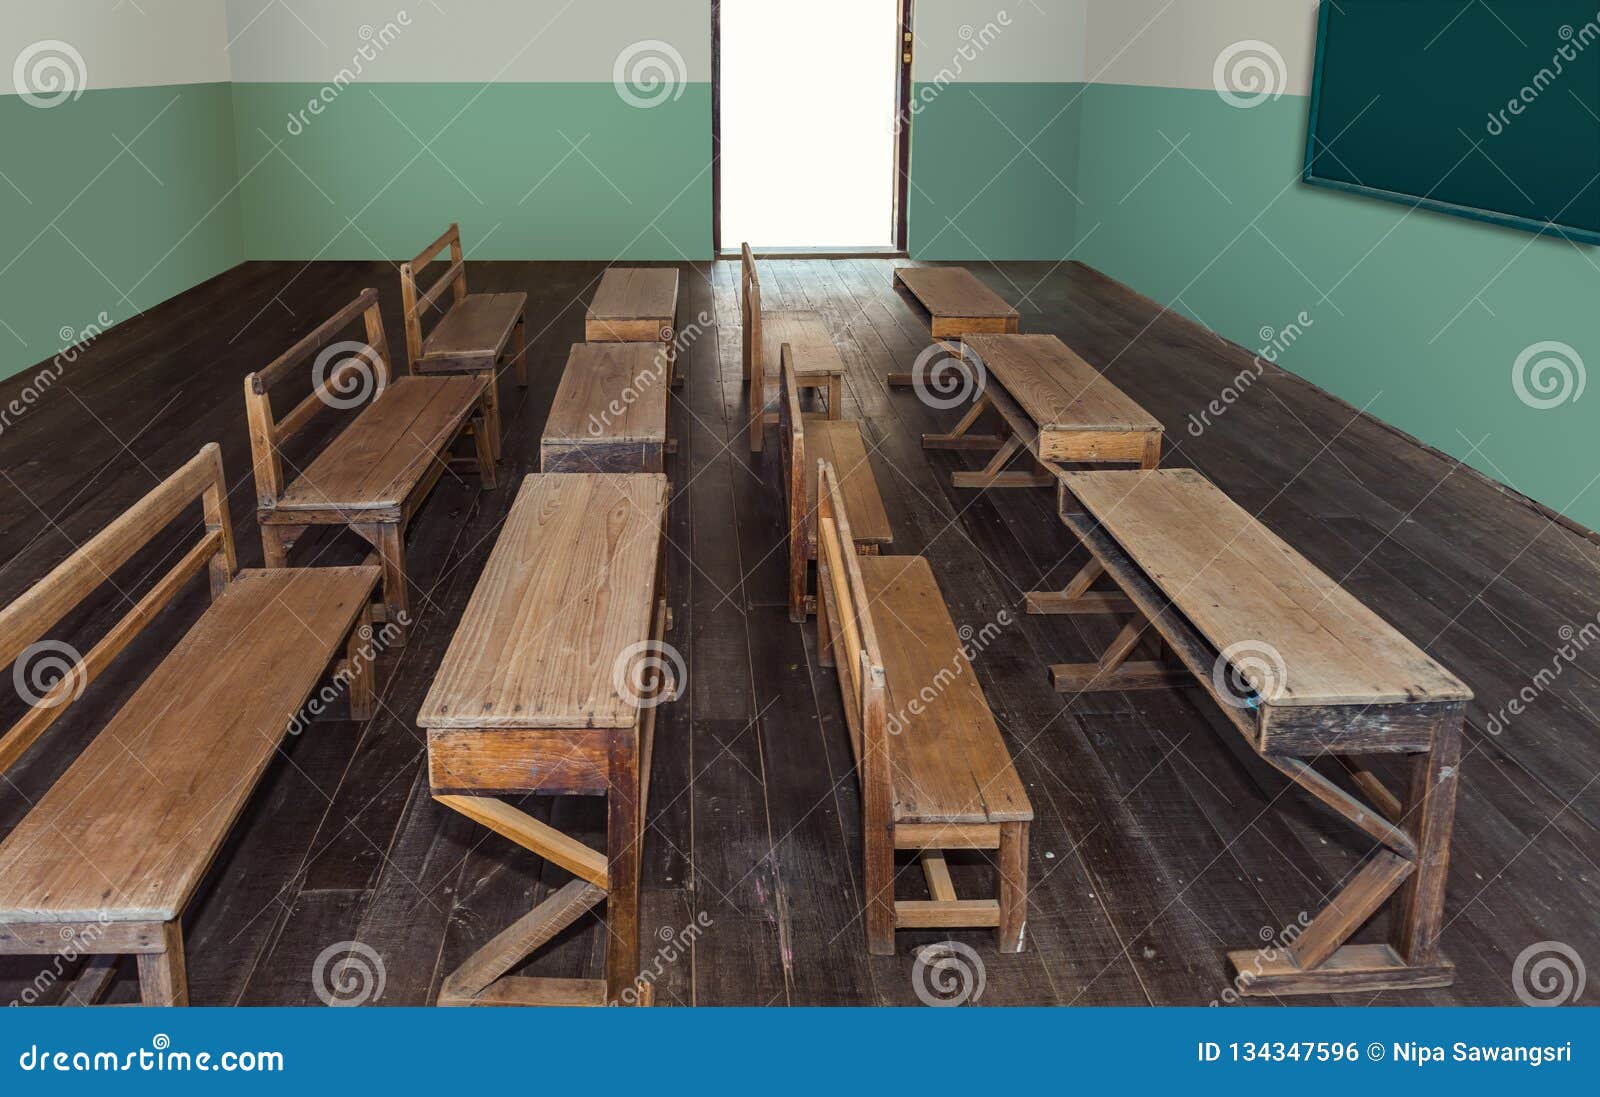 Antique Classroom In School With Rows Of Empty Wooden Desks Stock